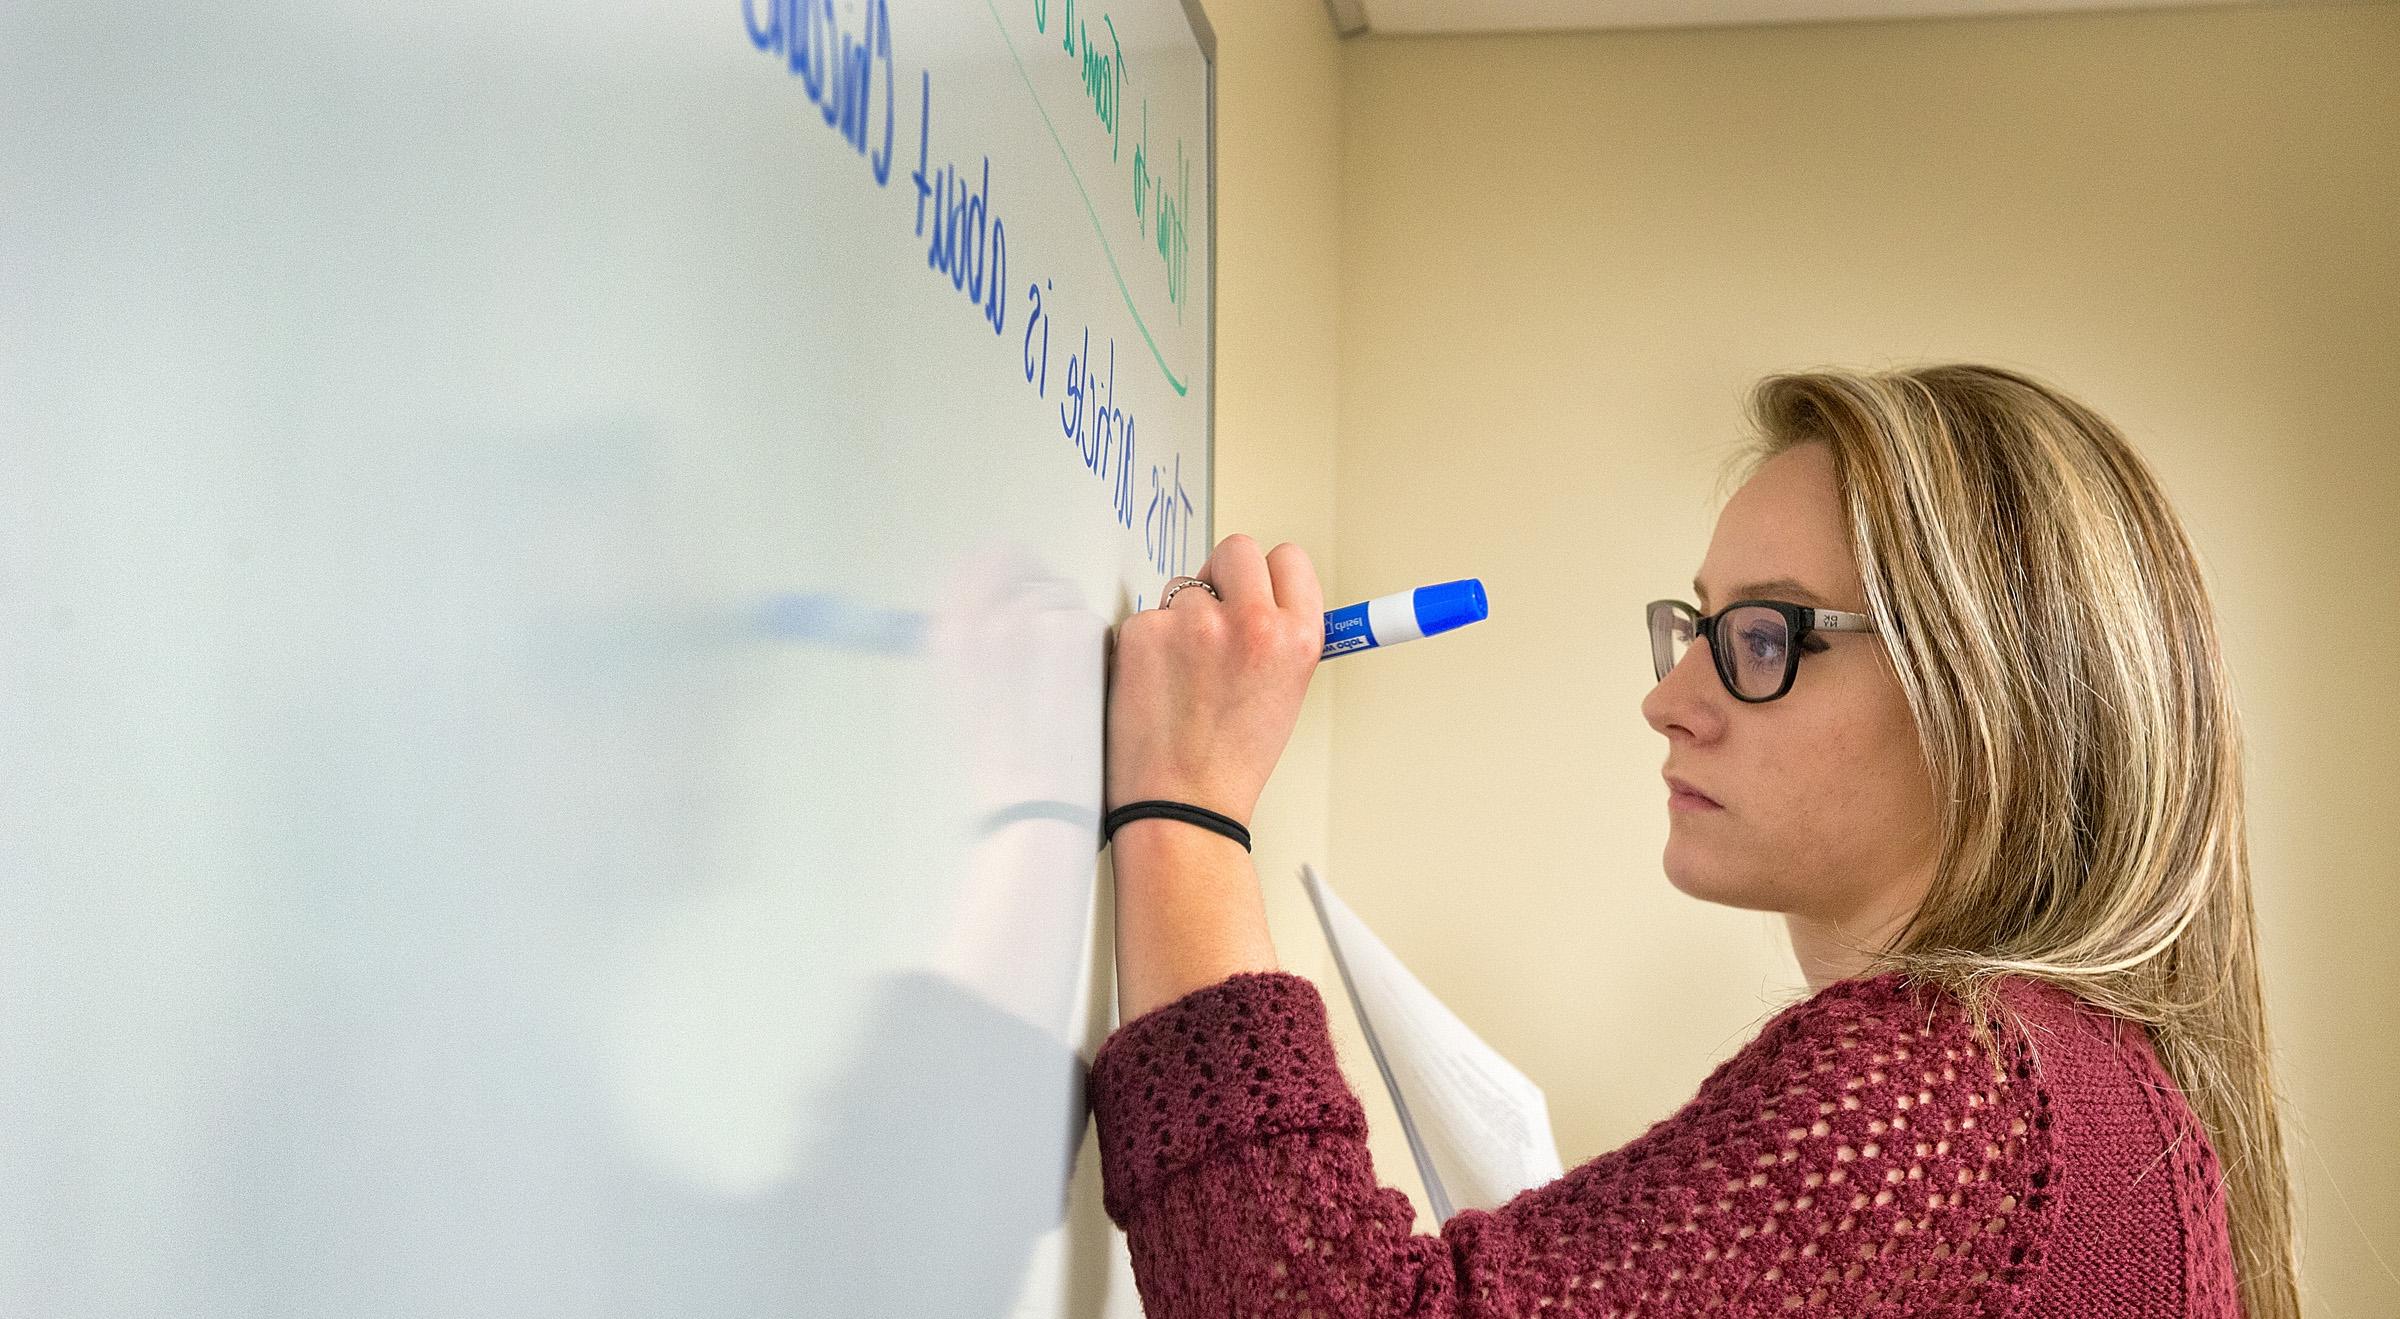 University of Mount Union student writing on a whiteboard 